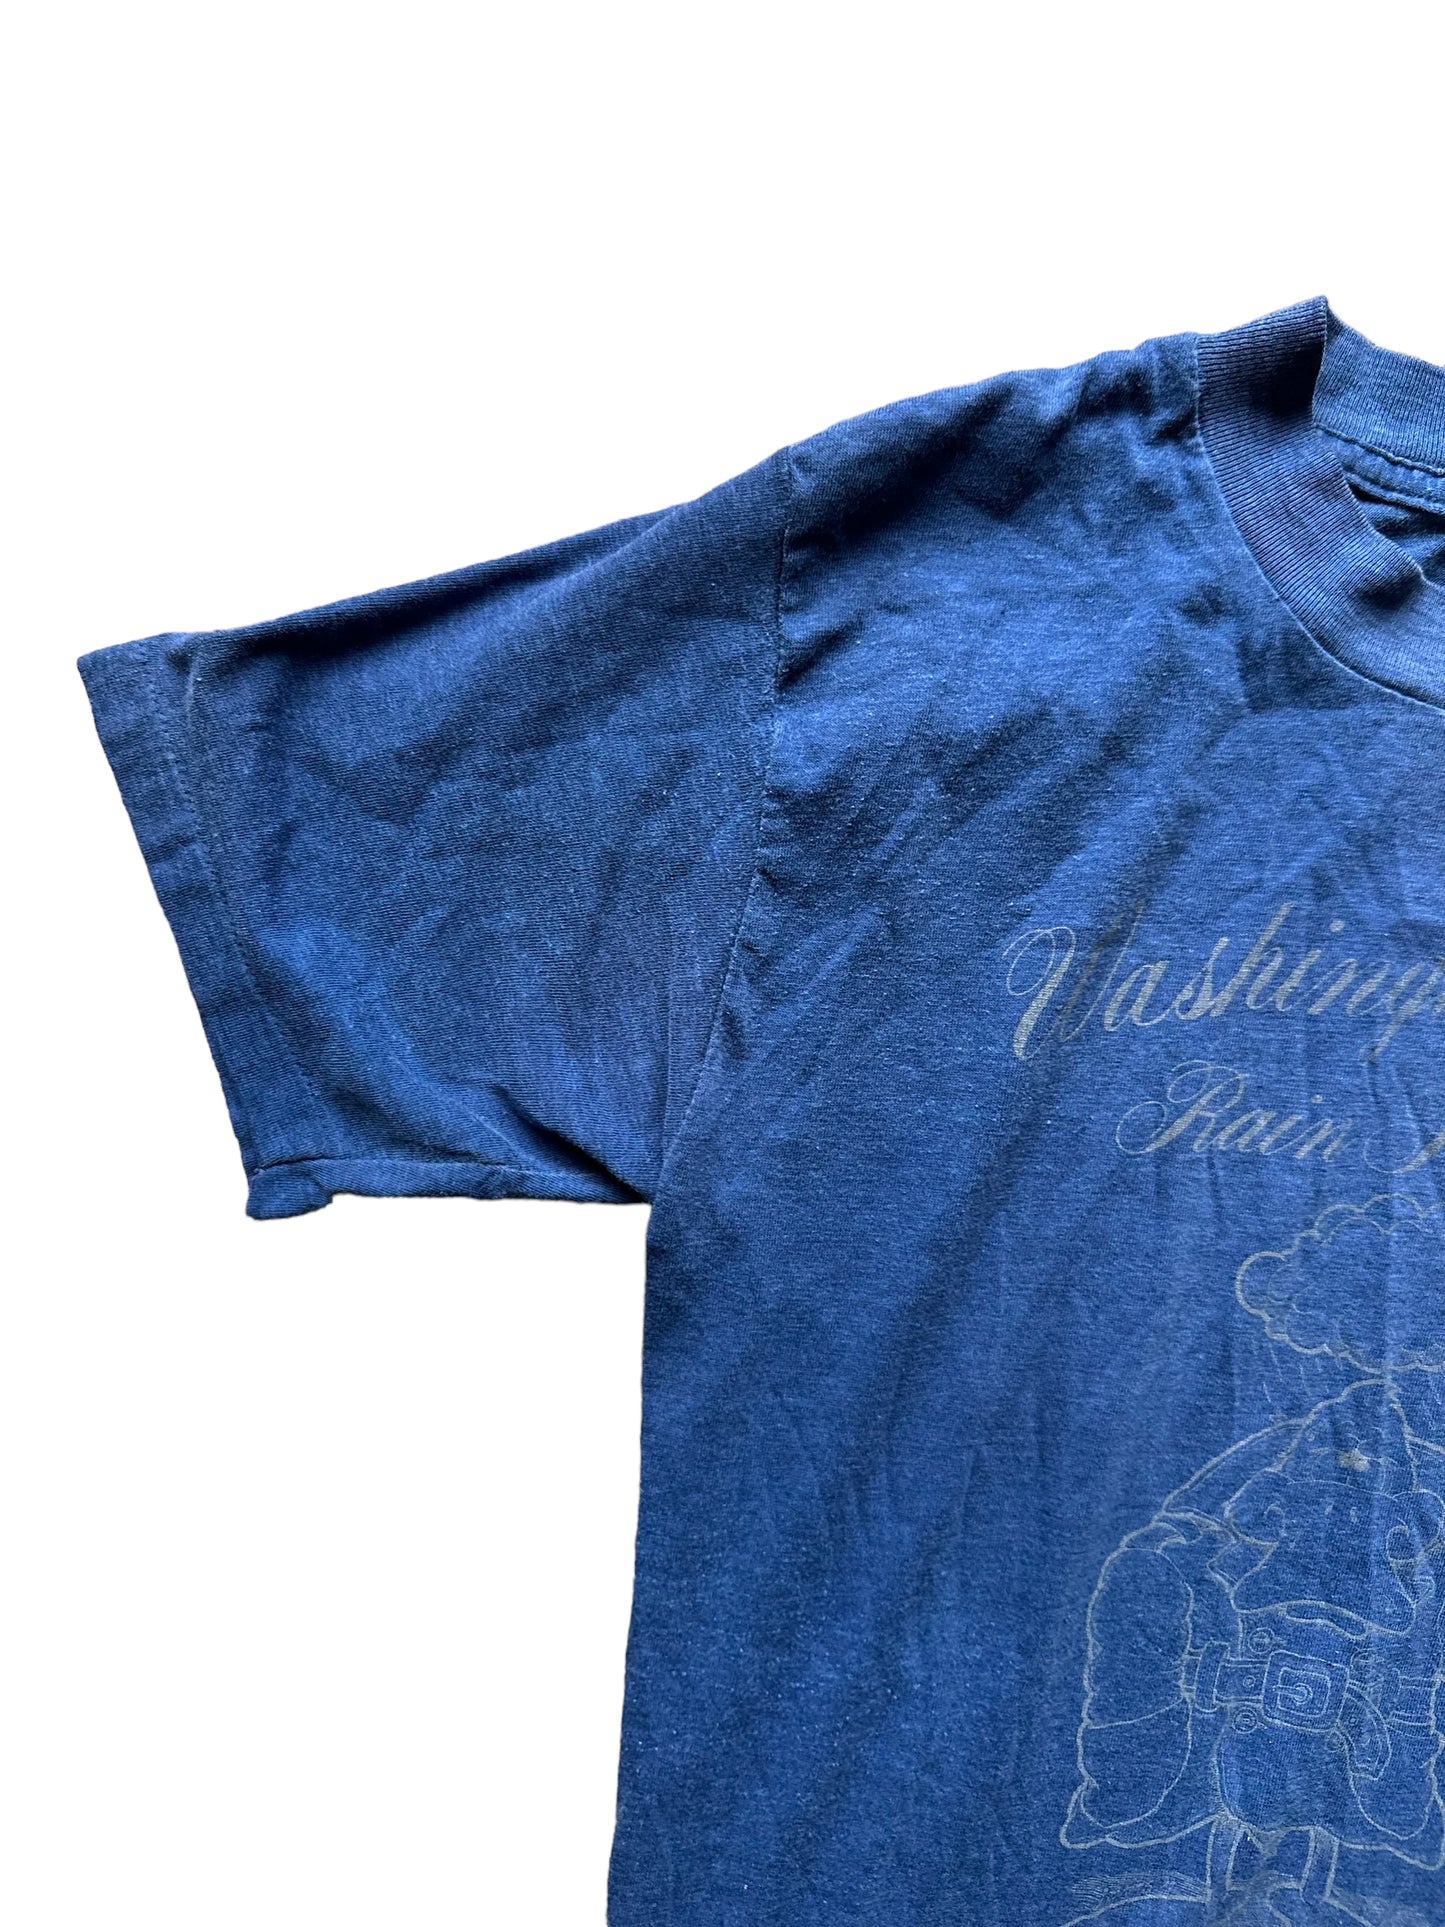 Right Sleeve View of Vintage Washington State Rain Festival T Shirt SZ Medium |  Vintage Tee Seattle | Barn Owl Vintage Seattle